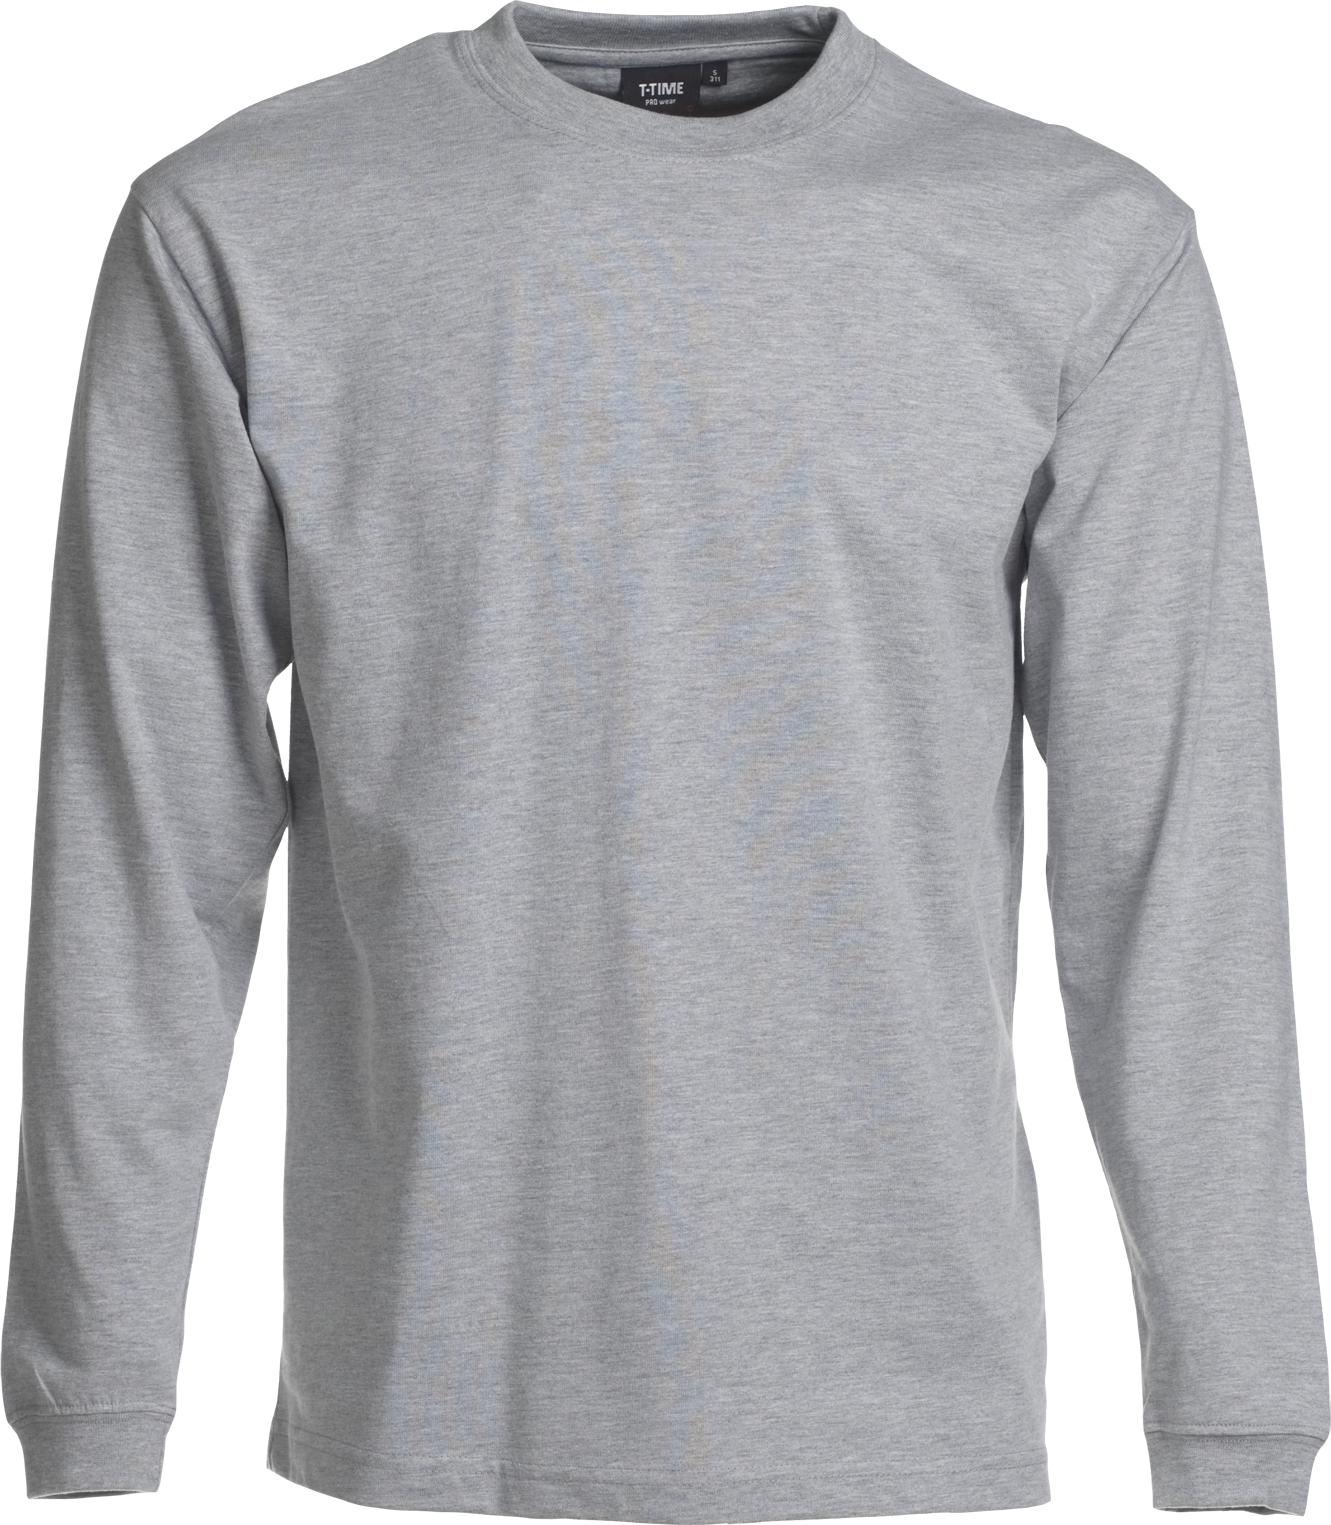 Grau Herren T-Shirt, Prowear (8150221)